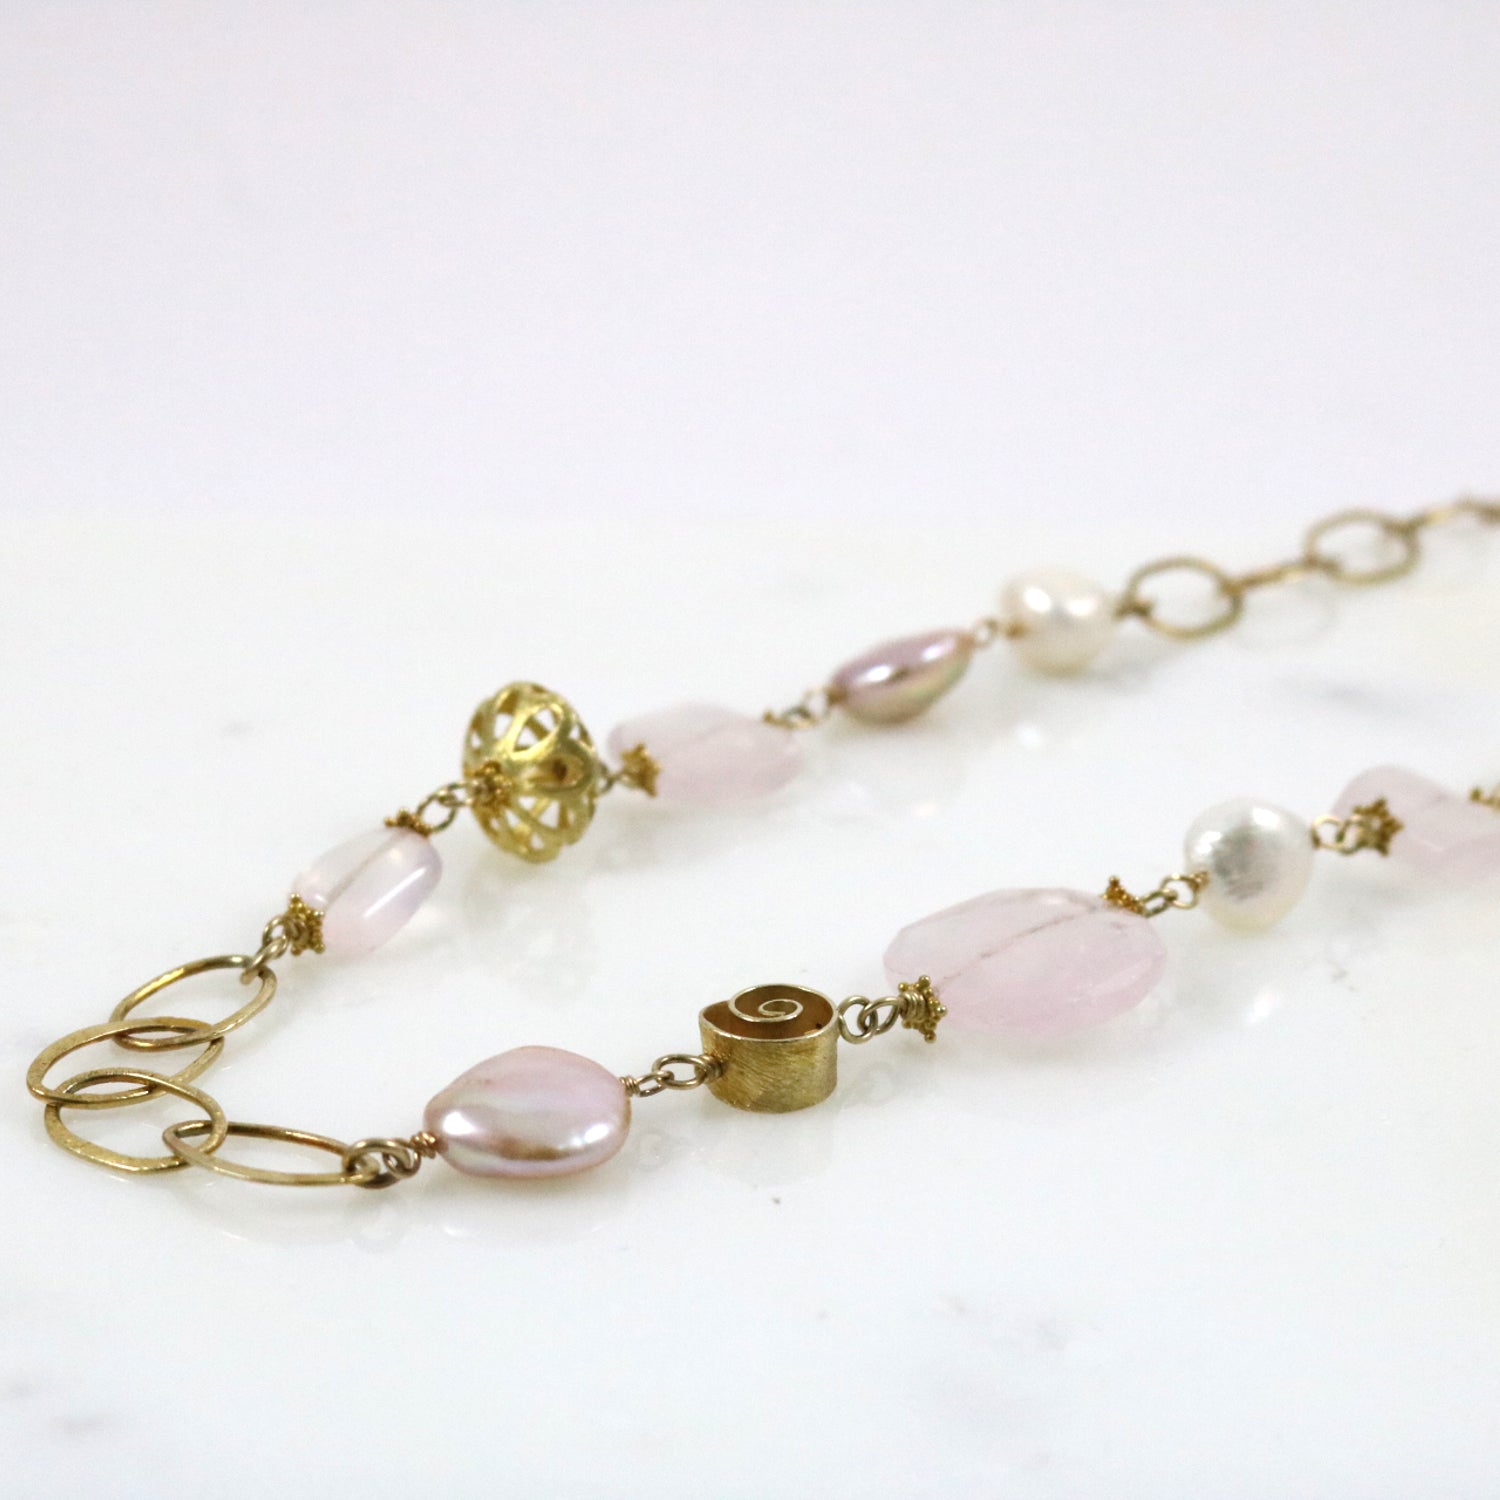 Quartz and Baroque Pearl Necklace